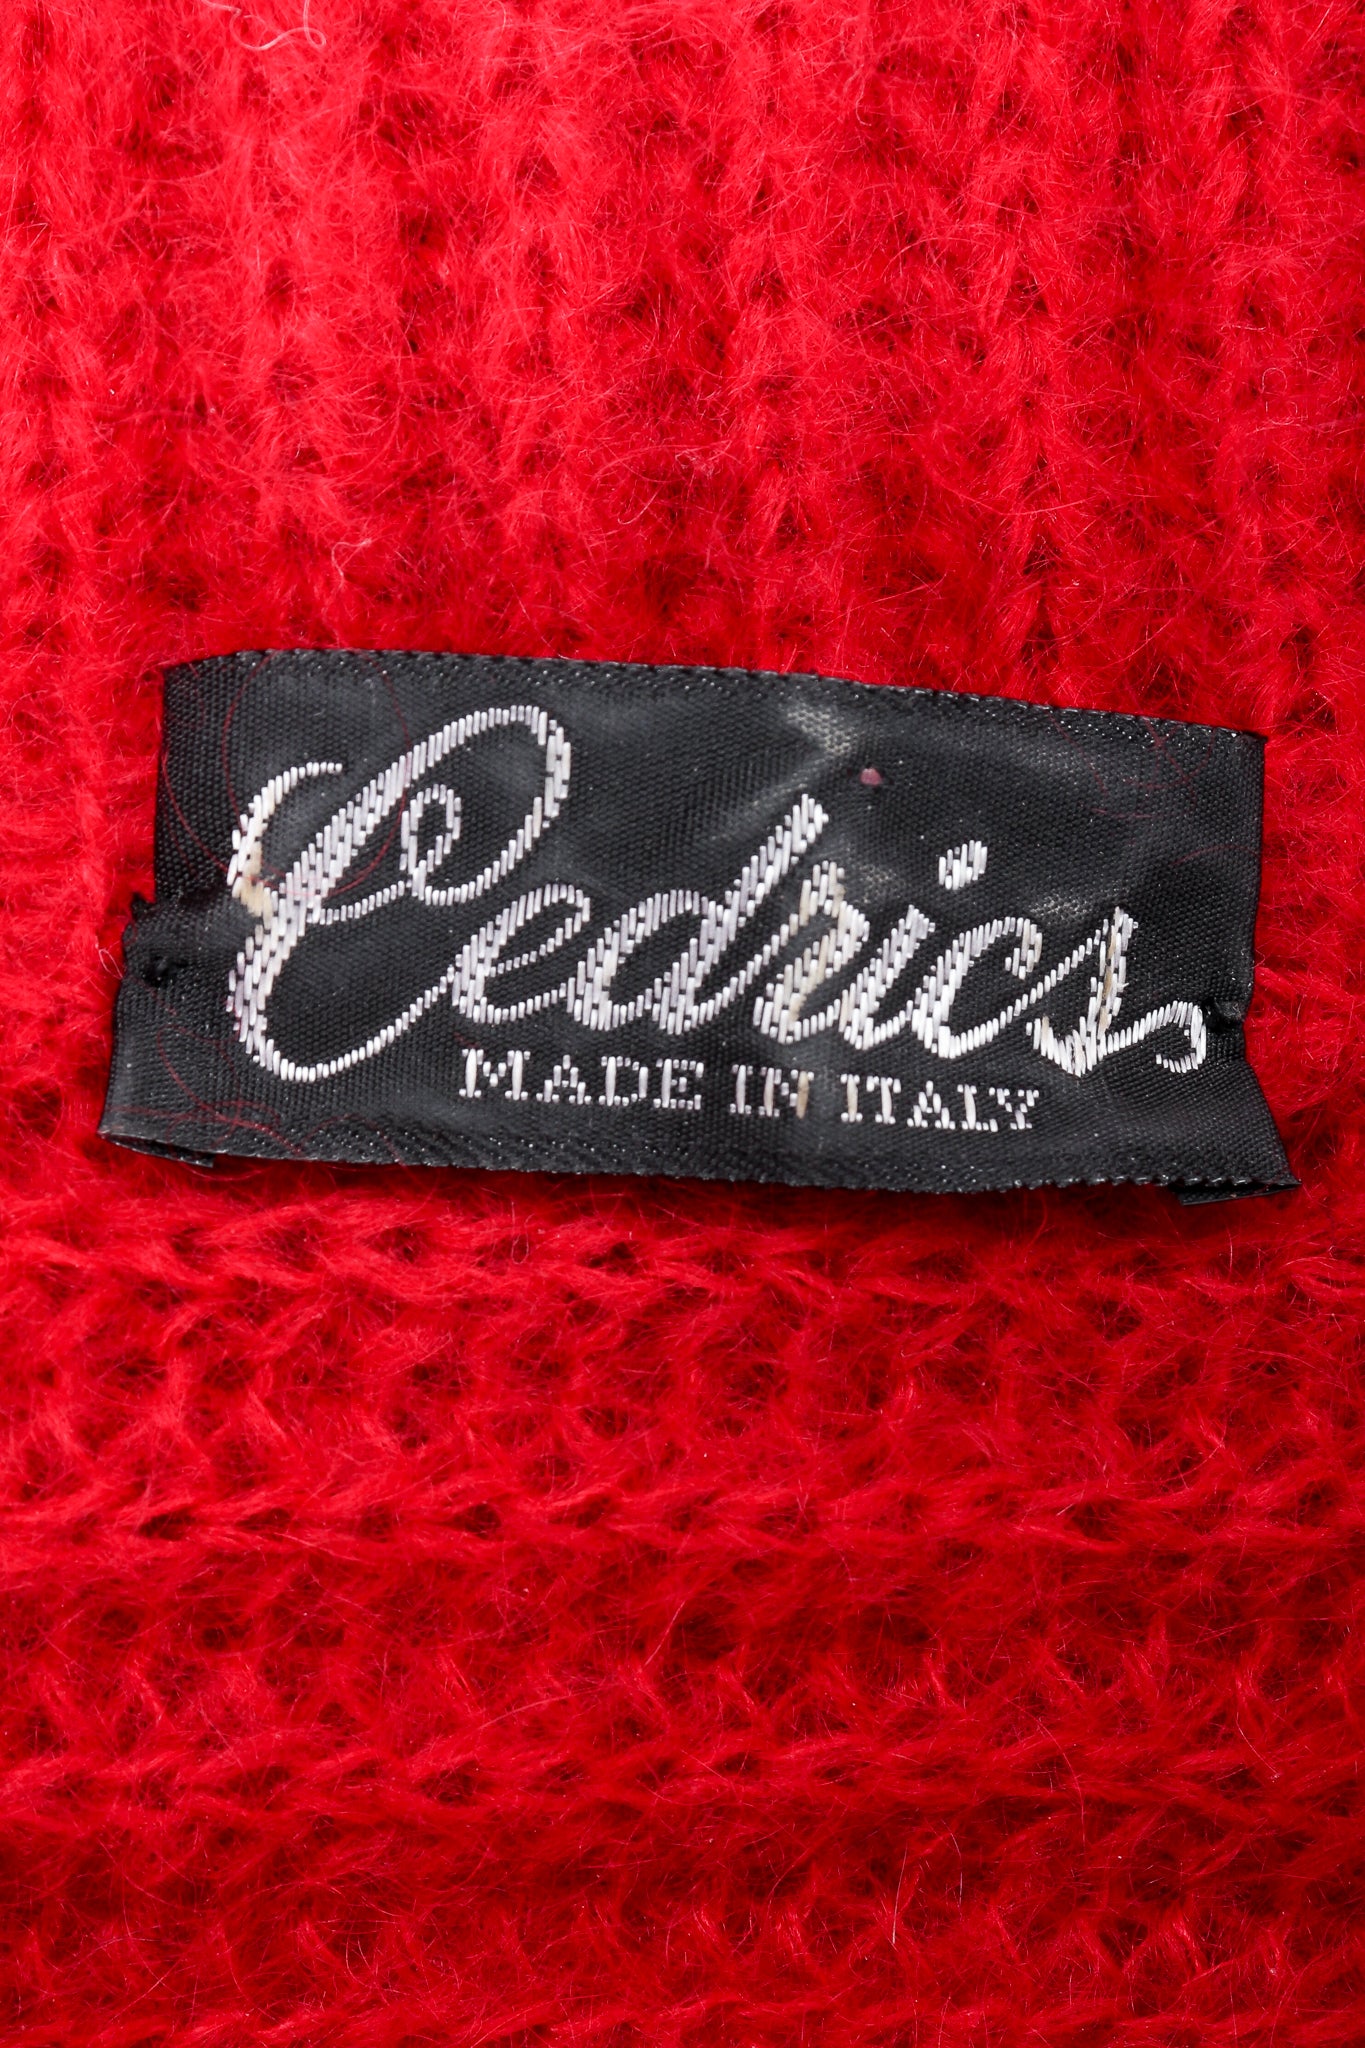 Recess Vintage Cedrics label on red knit sweater